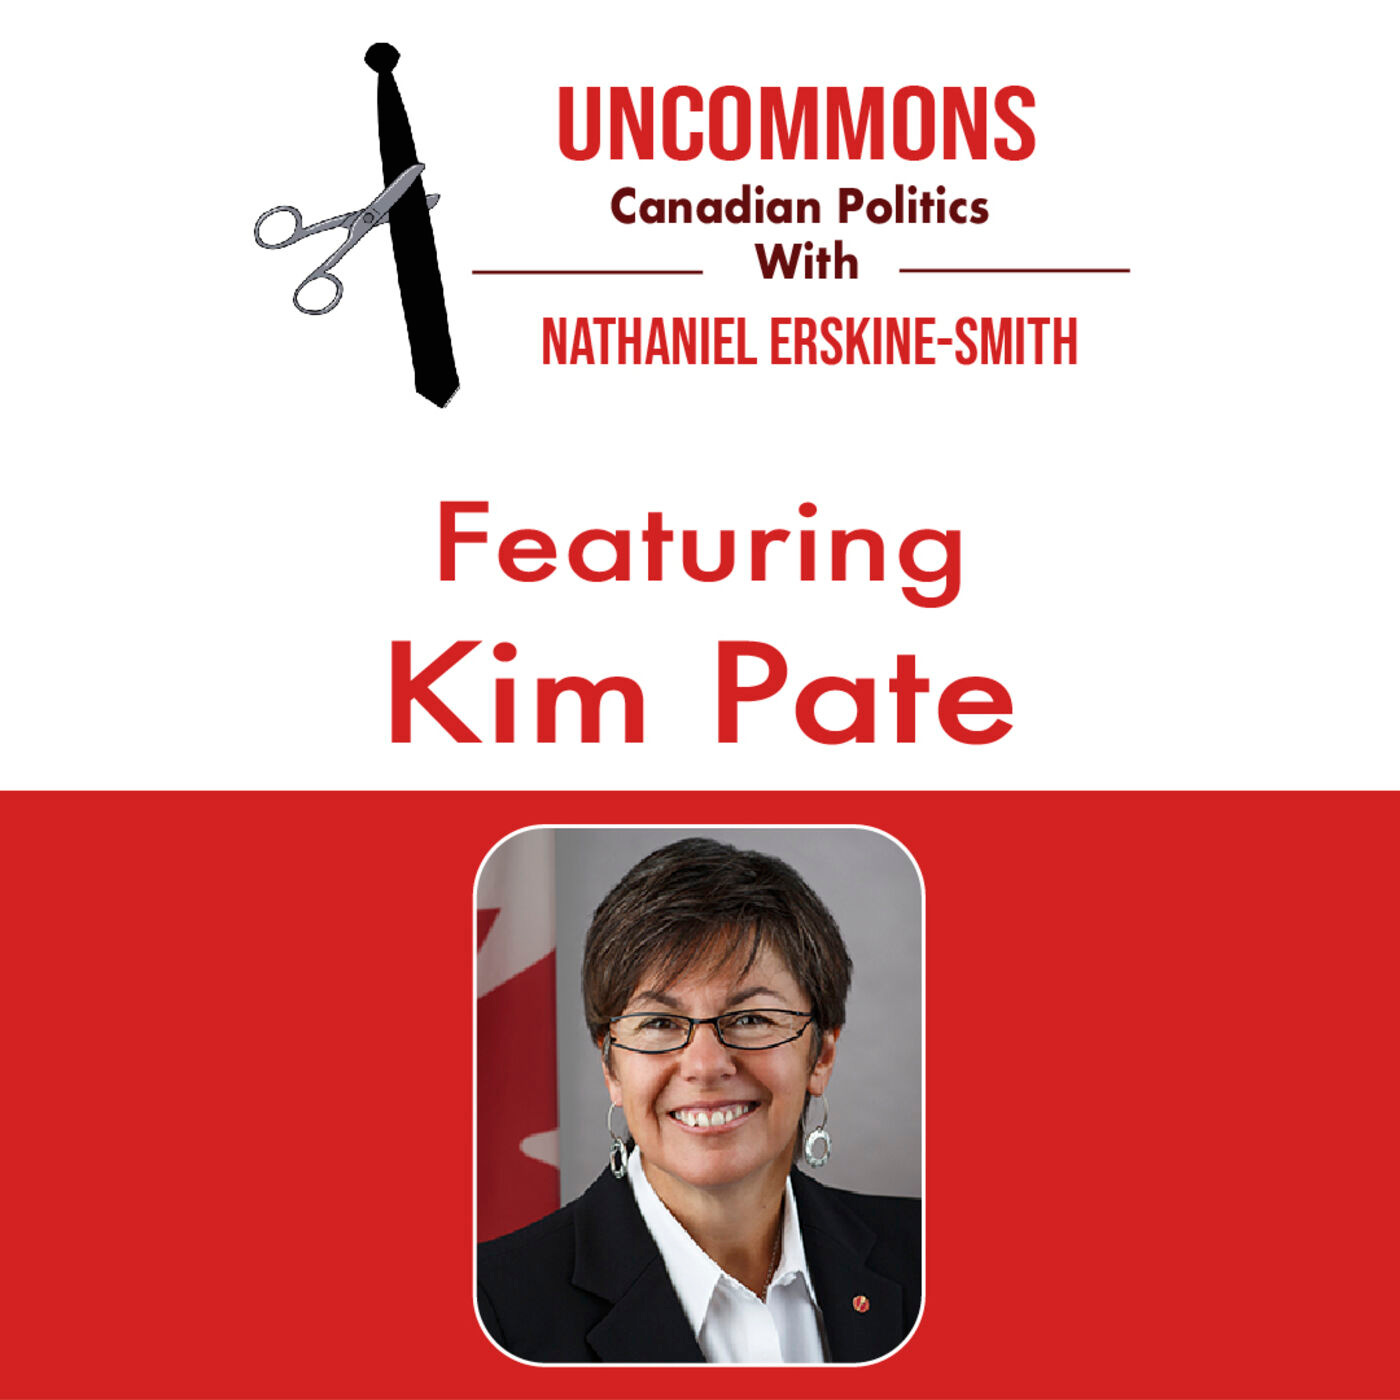 Fighting systemic inequality with Senator Kim Pate